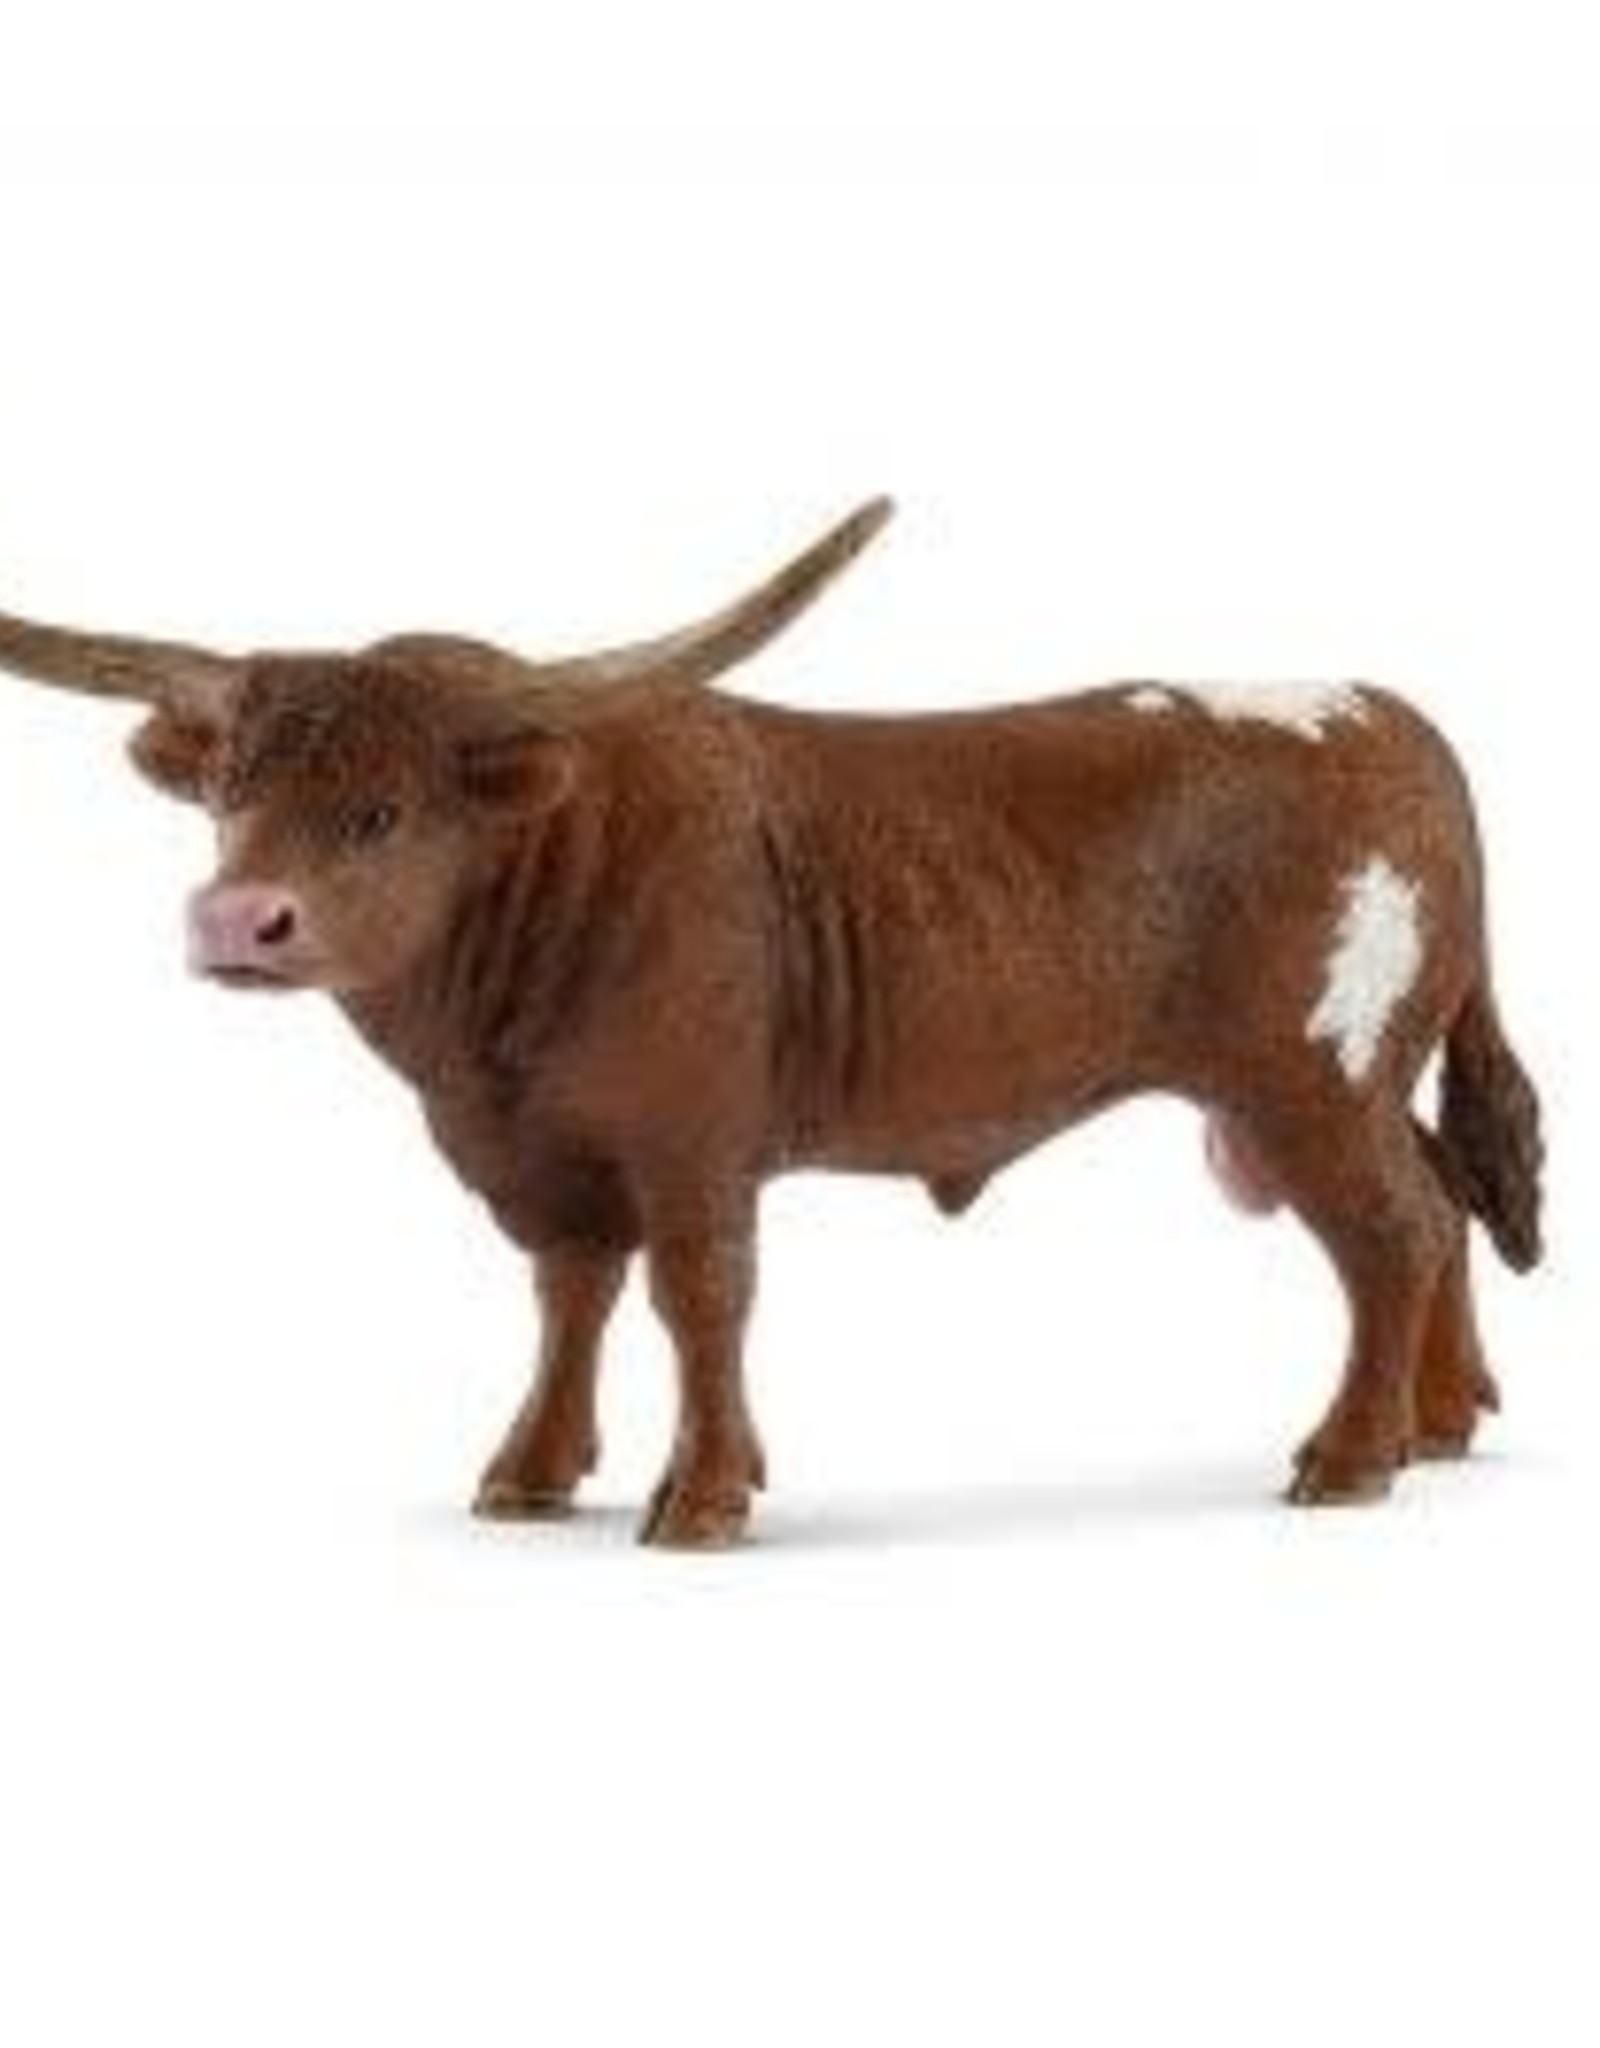 Schleich Texas Longhorn bull